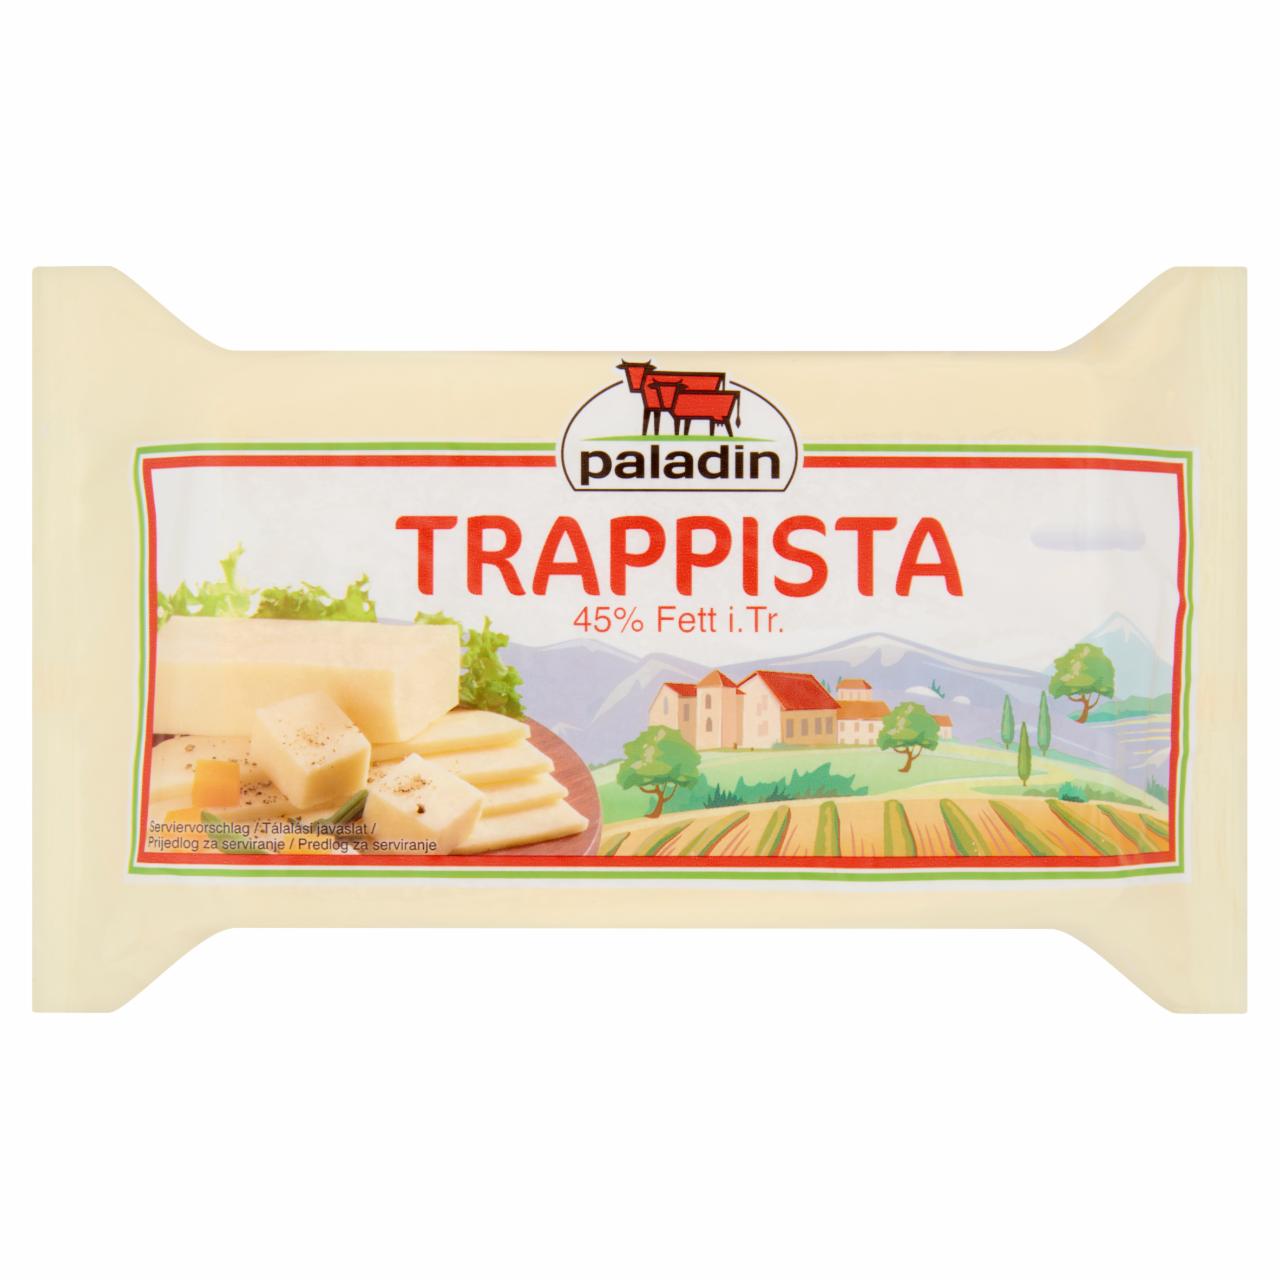 Képek - Paladin trappista félkemény, zsíros sajt 400 g